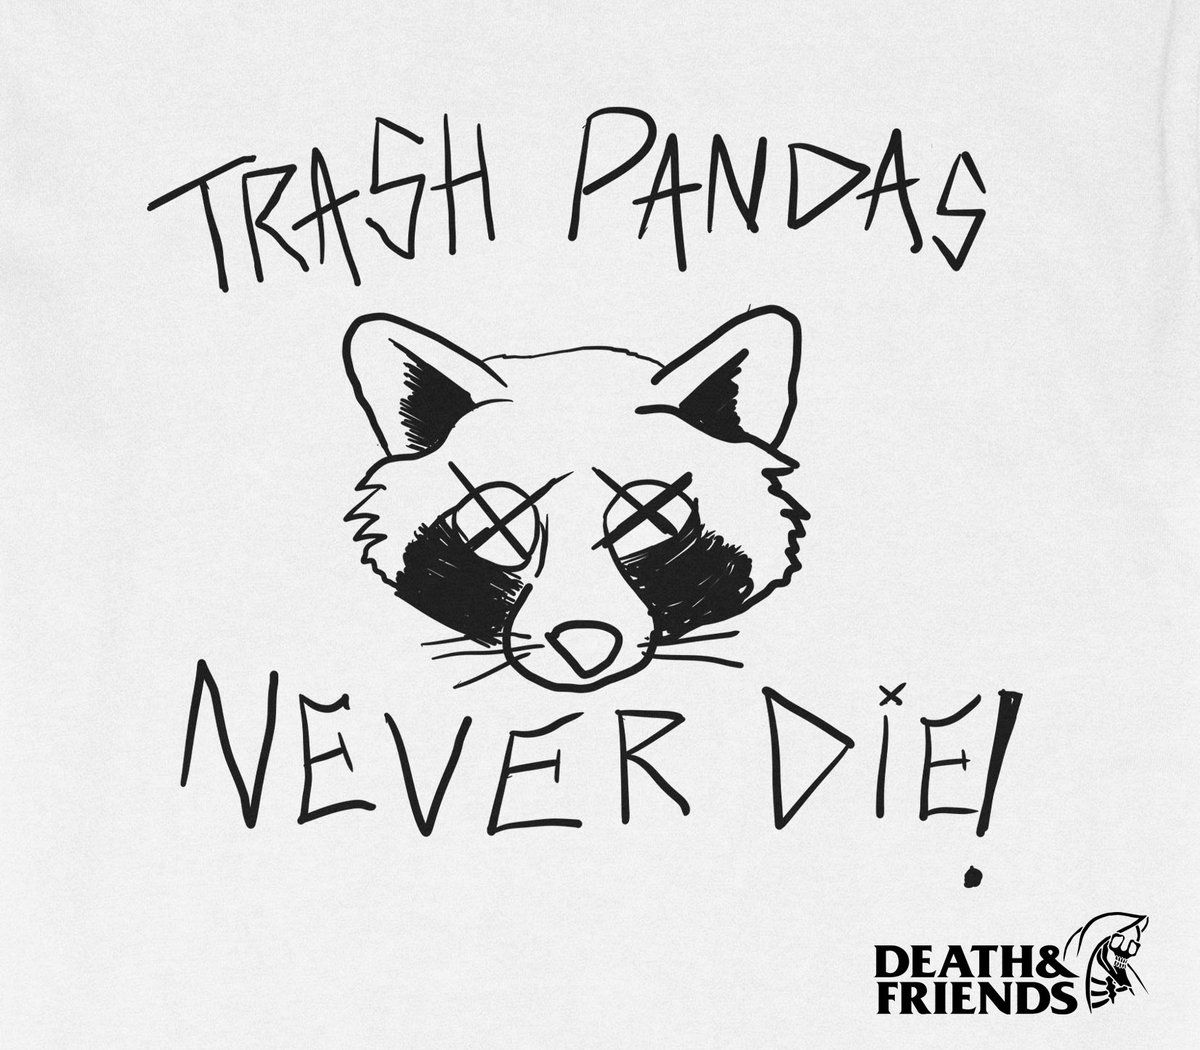 Trash Pandas Never Die @deathandfriends.ltd 

#deathnfriends #deathandfriends #deathnfriendsskull #deathandblues #trashpanda #trashbag #trashpanda #burningdumpster #raccoon #raccoons #raccoonlove #raccoonlife #trashpandas #raccoonlover #raccoonsofinstagram #racoon #raccon